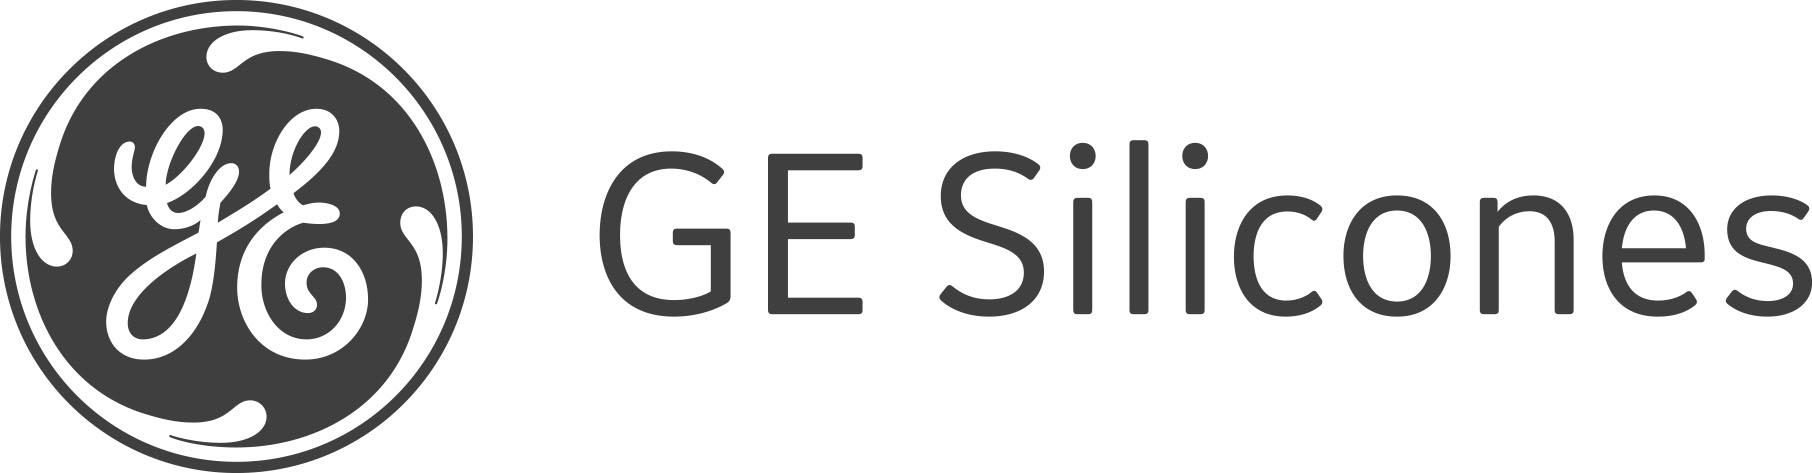 GE Silicones  - Logo